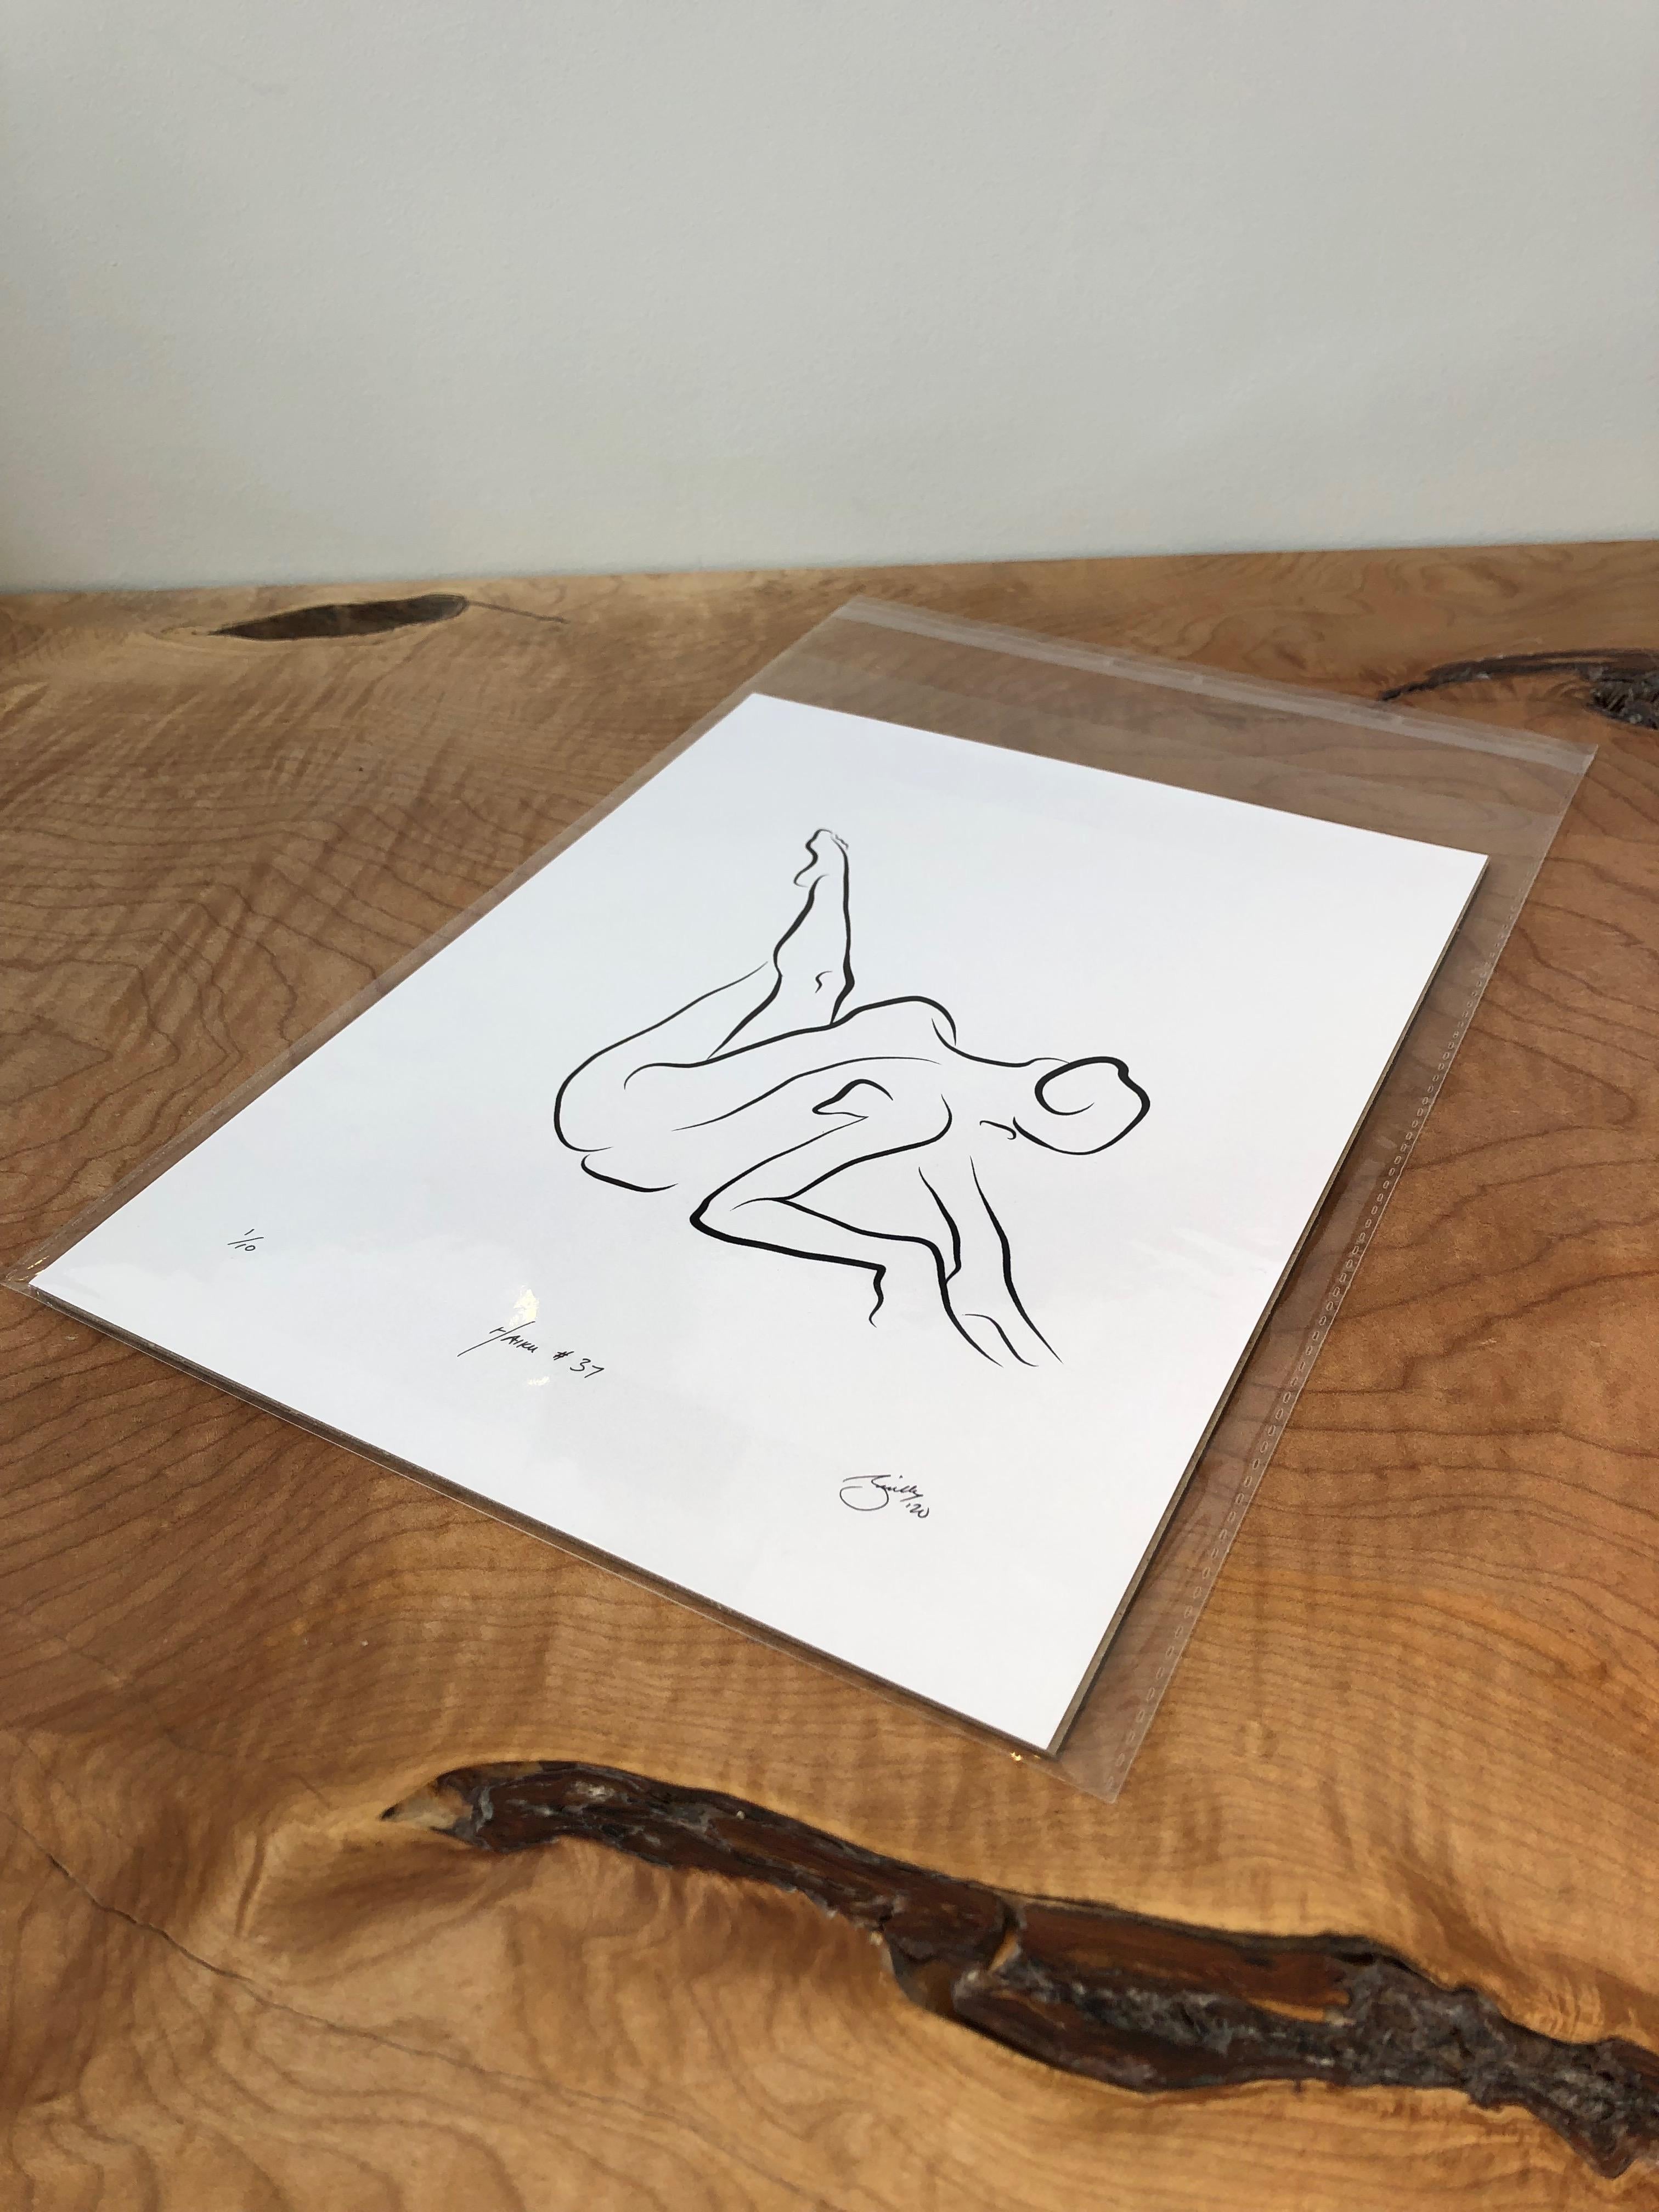 Haiku #37, 1/50 - Digital Vector Drawing Dynamic Pose Seated Female Nude Woman F - Contemporary Art by Michael Binkley